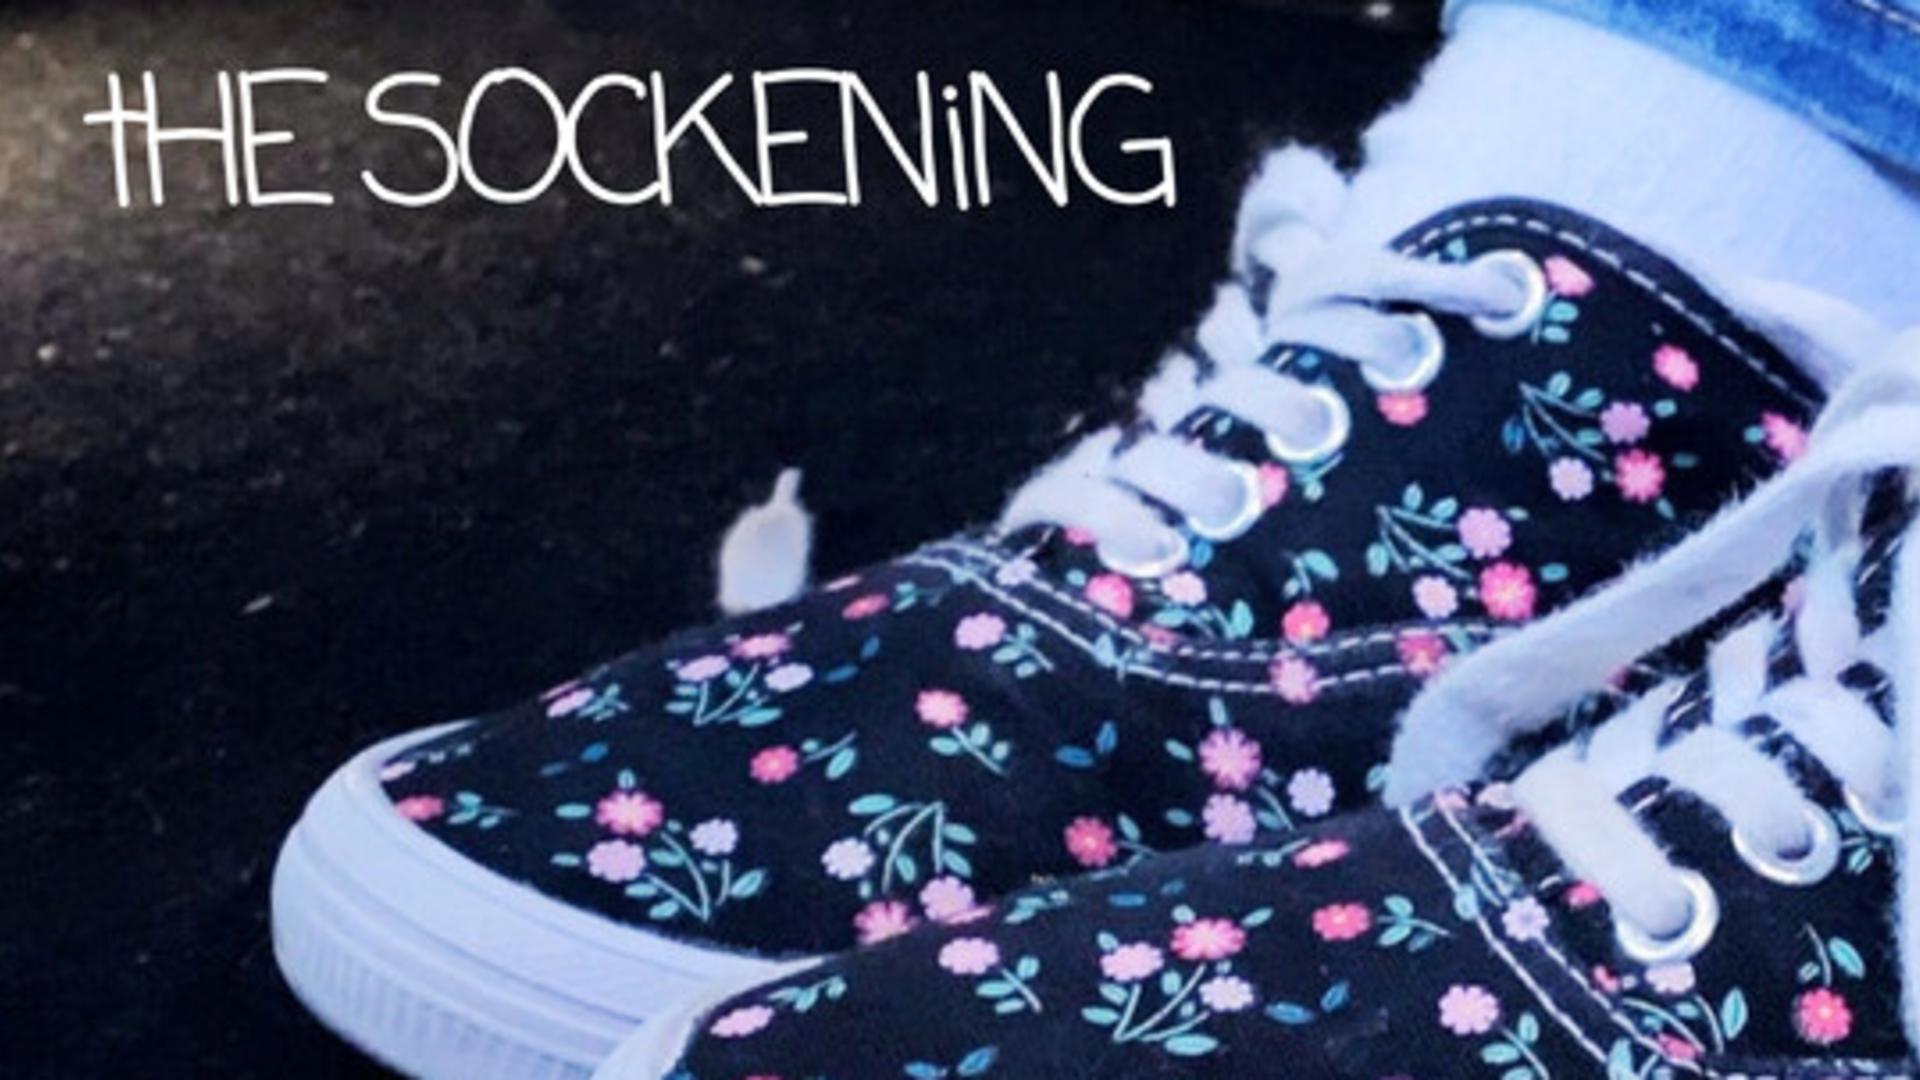 The Sockening